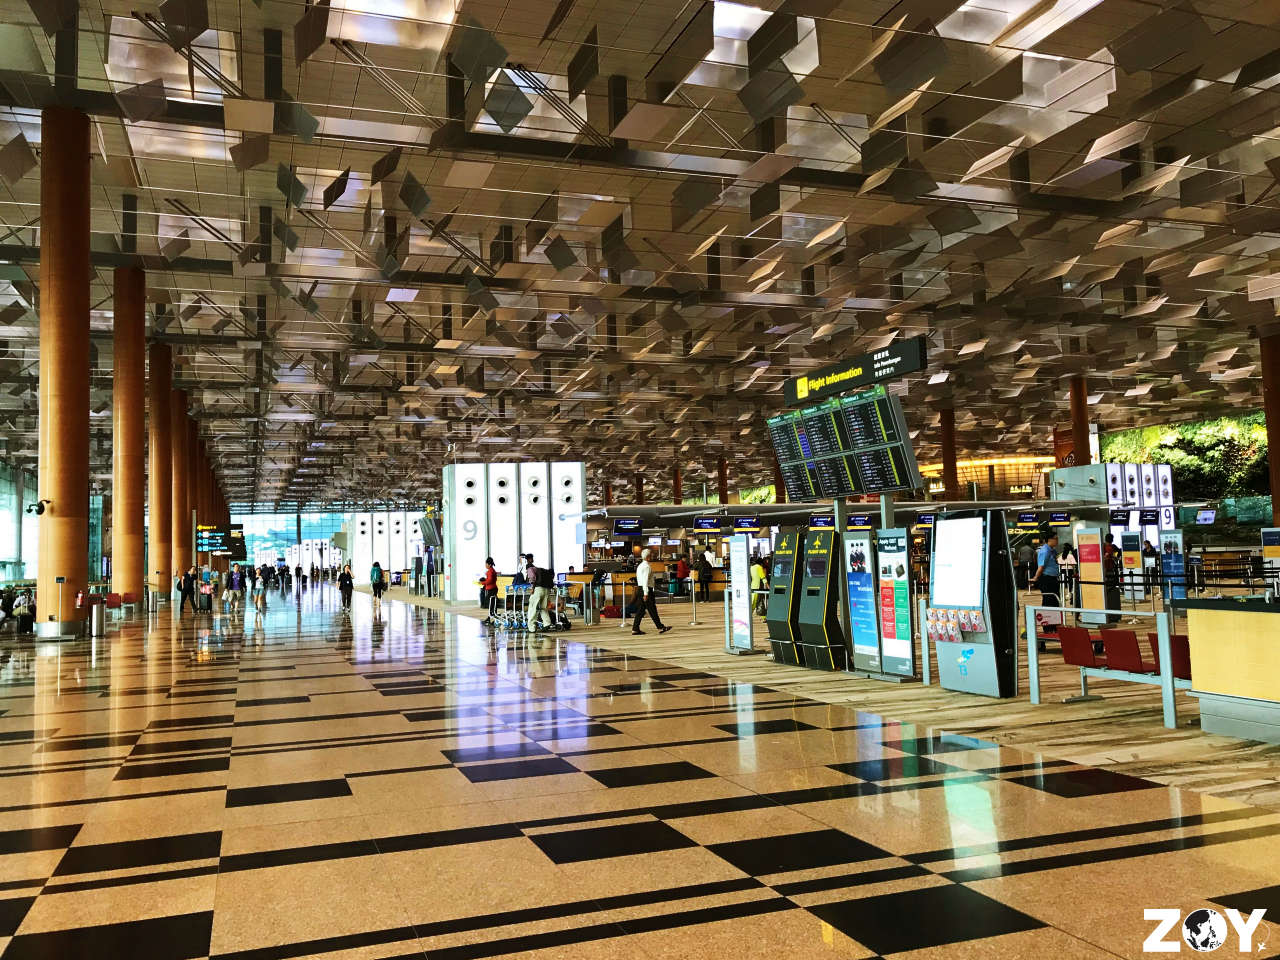 Changi Airport: Exploring Singapore's Premier Gateway — Zoy To The World